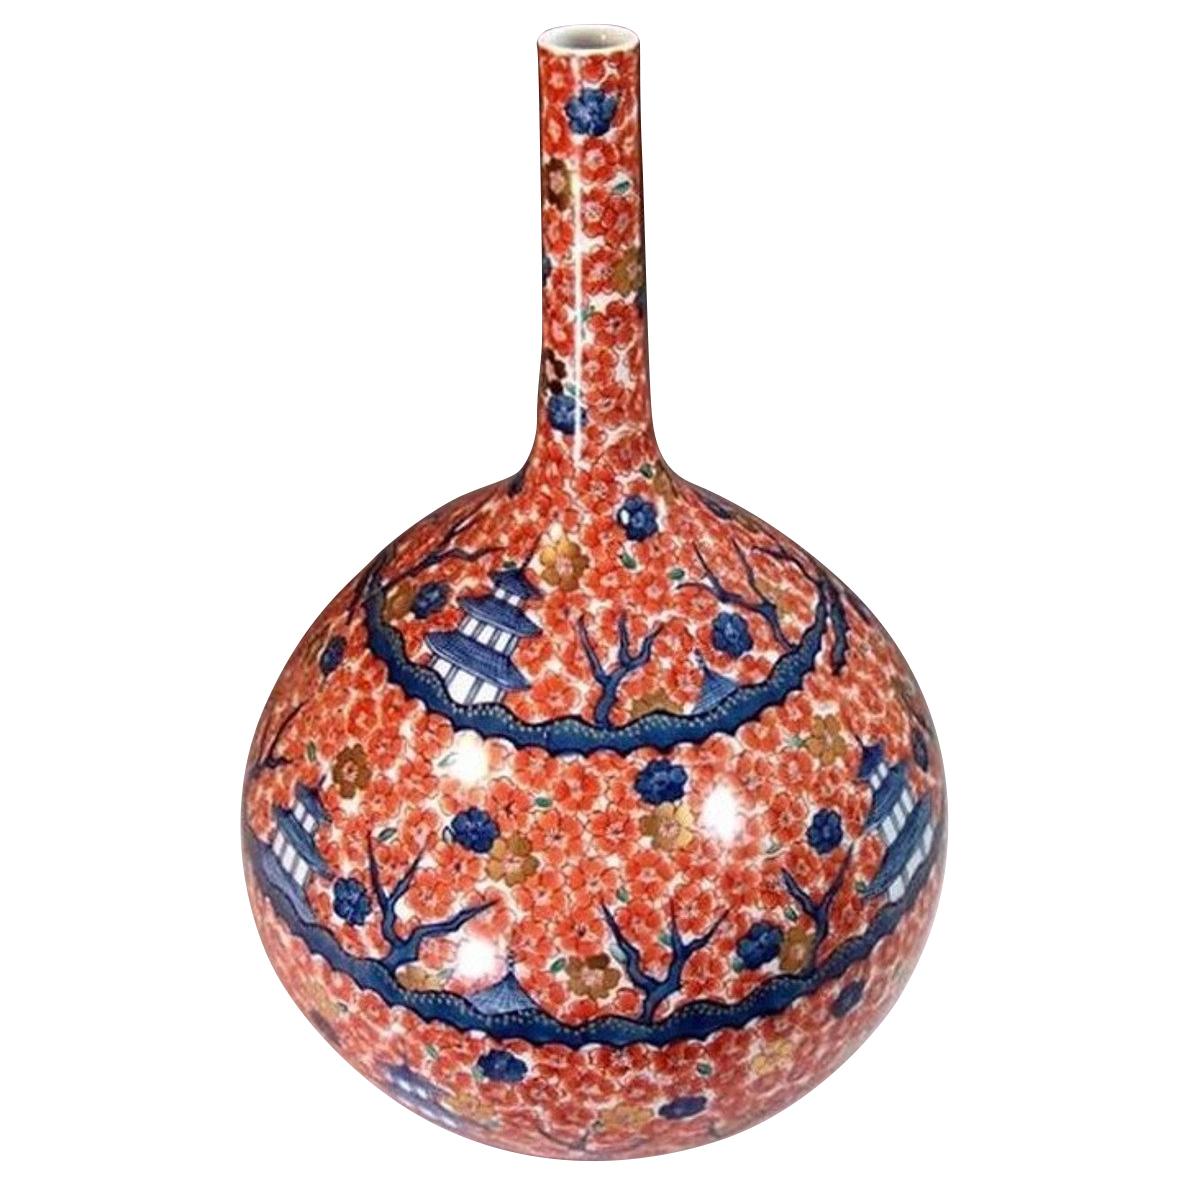 Large Contemporary Japanese Red Blue Gilded Porcelain Vase by Master Artist